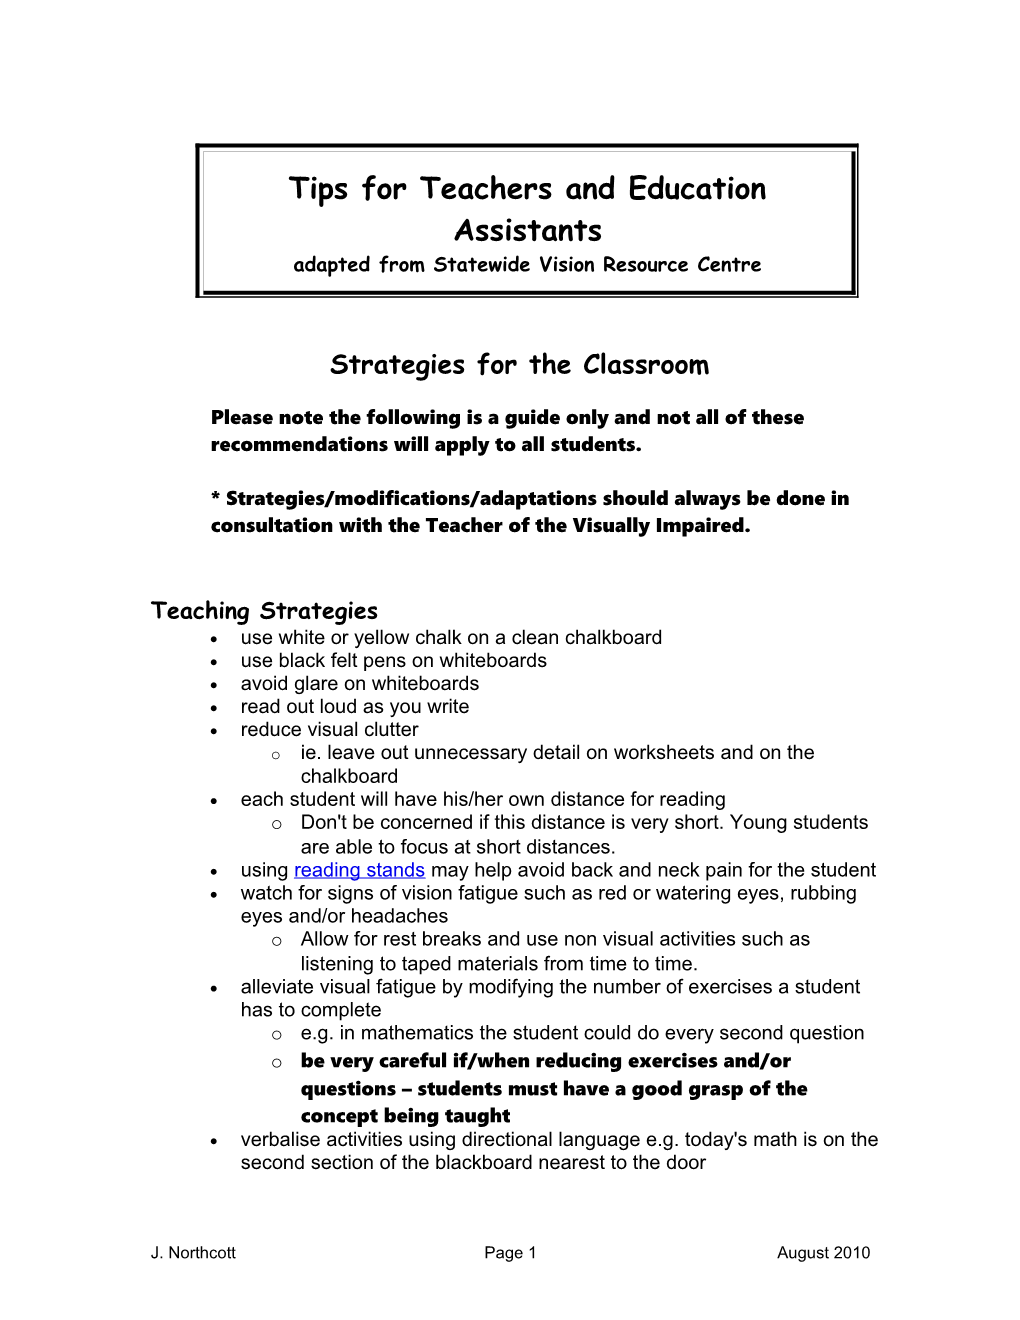 Tips for Teachers and Teachers Aides